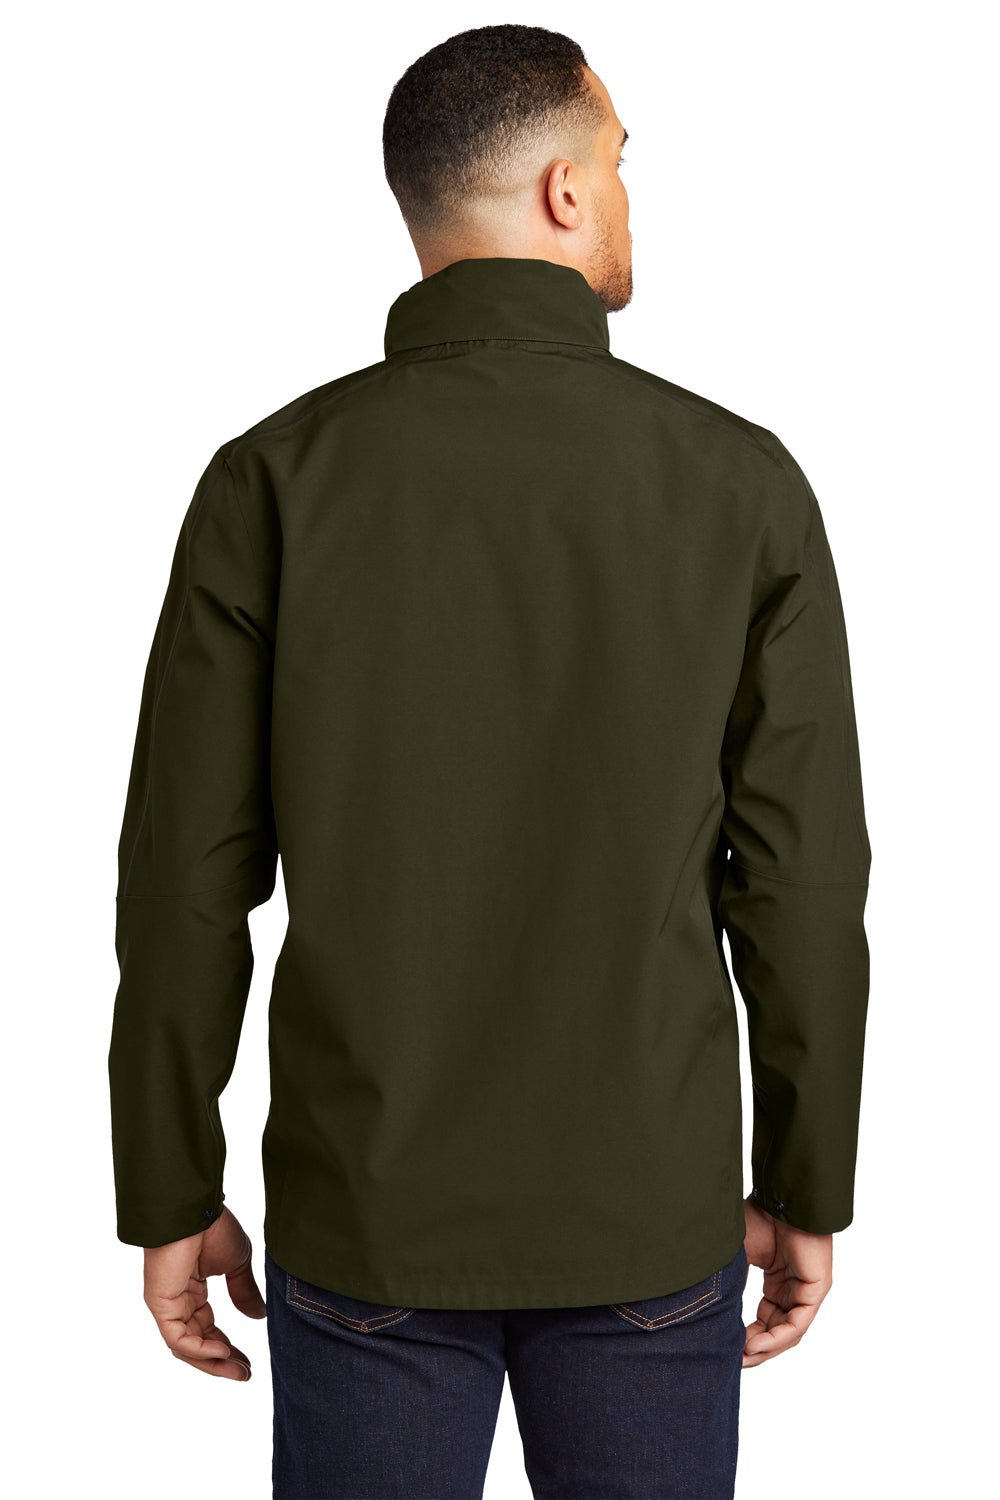 Ogio Mens Utilitarian Full Zip Hooded Jacket Drive Green Side